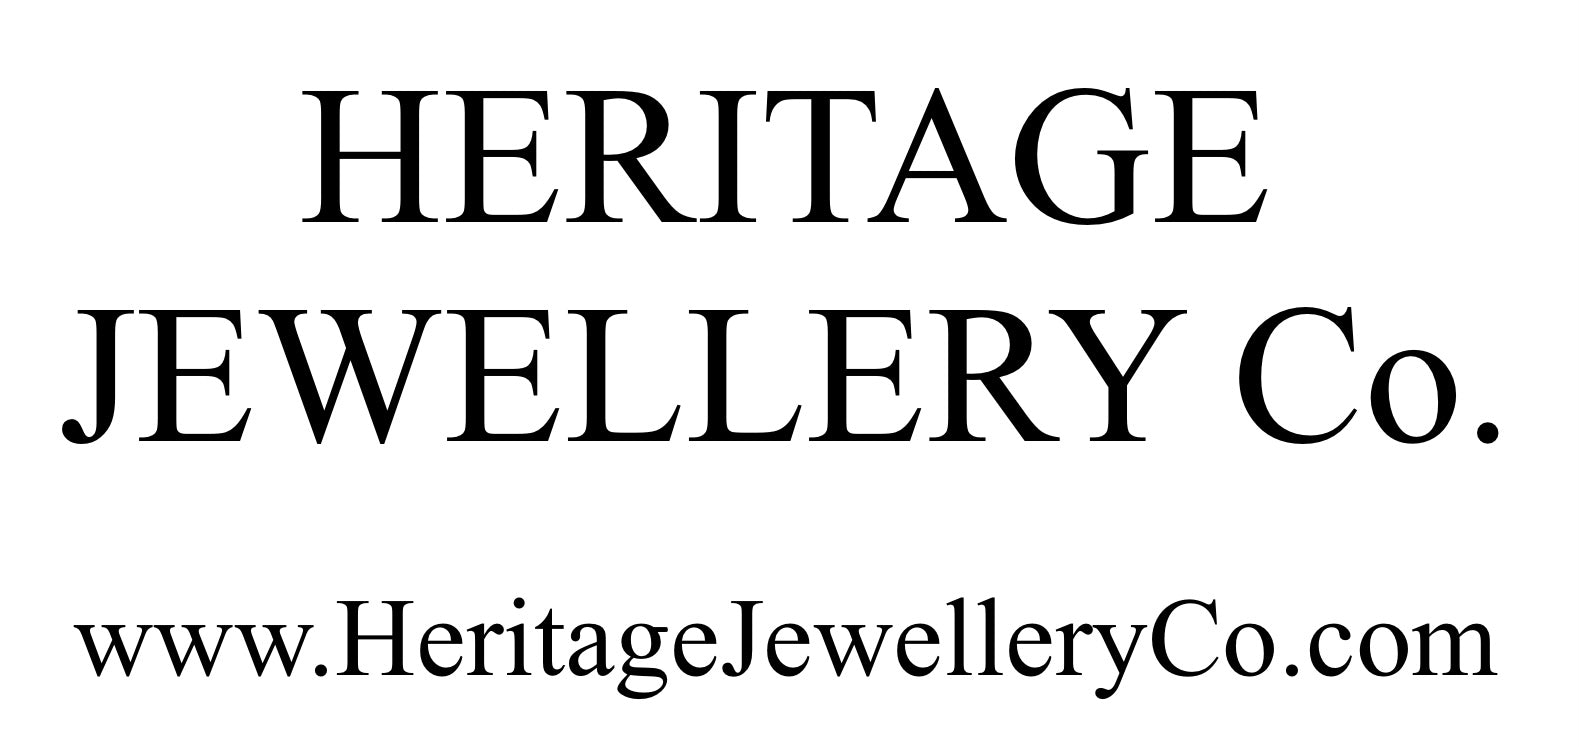 Heritage Jewellery Co